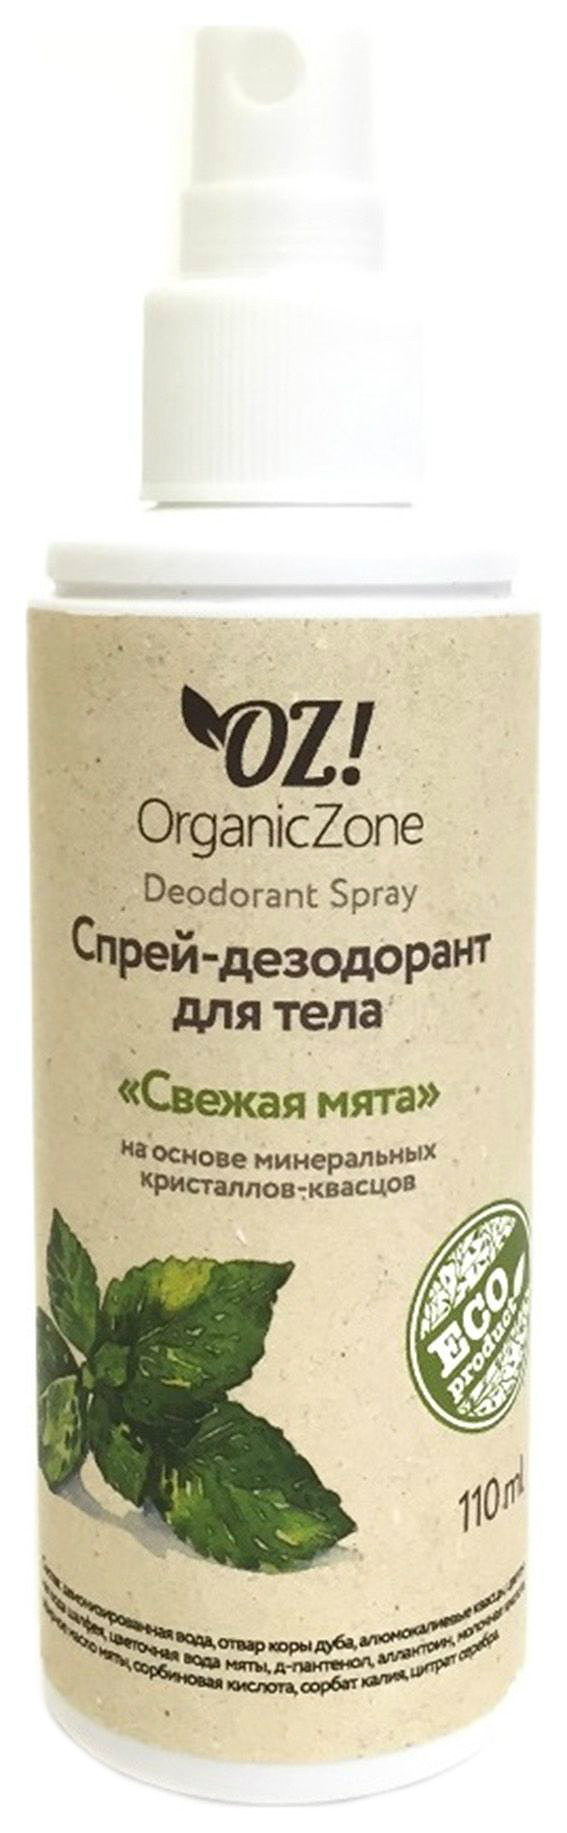 Дезодорант OrganicZone Свежая мята 110 мл дезодорант organiczone свежая мята 110 мл